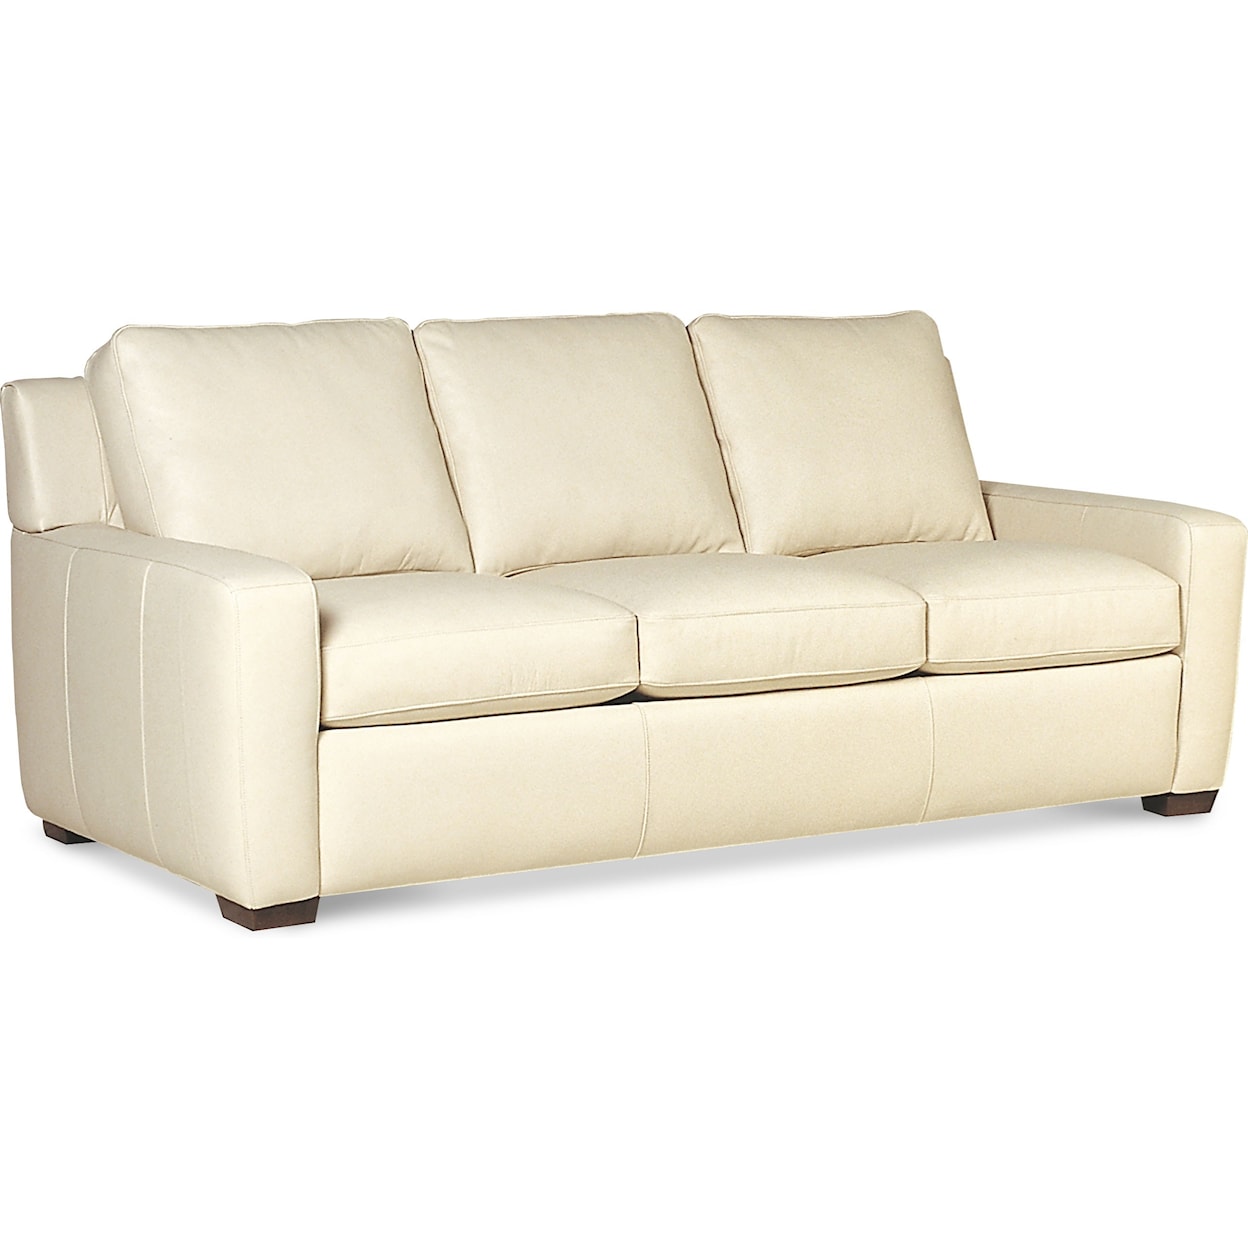 American Leather Lisben Sofa